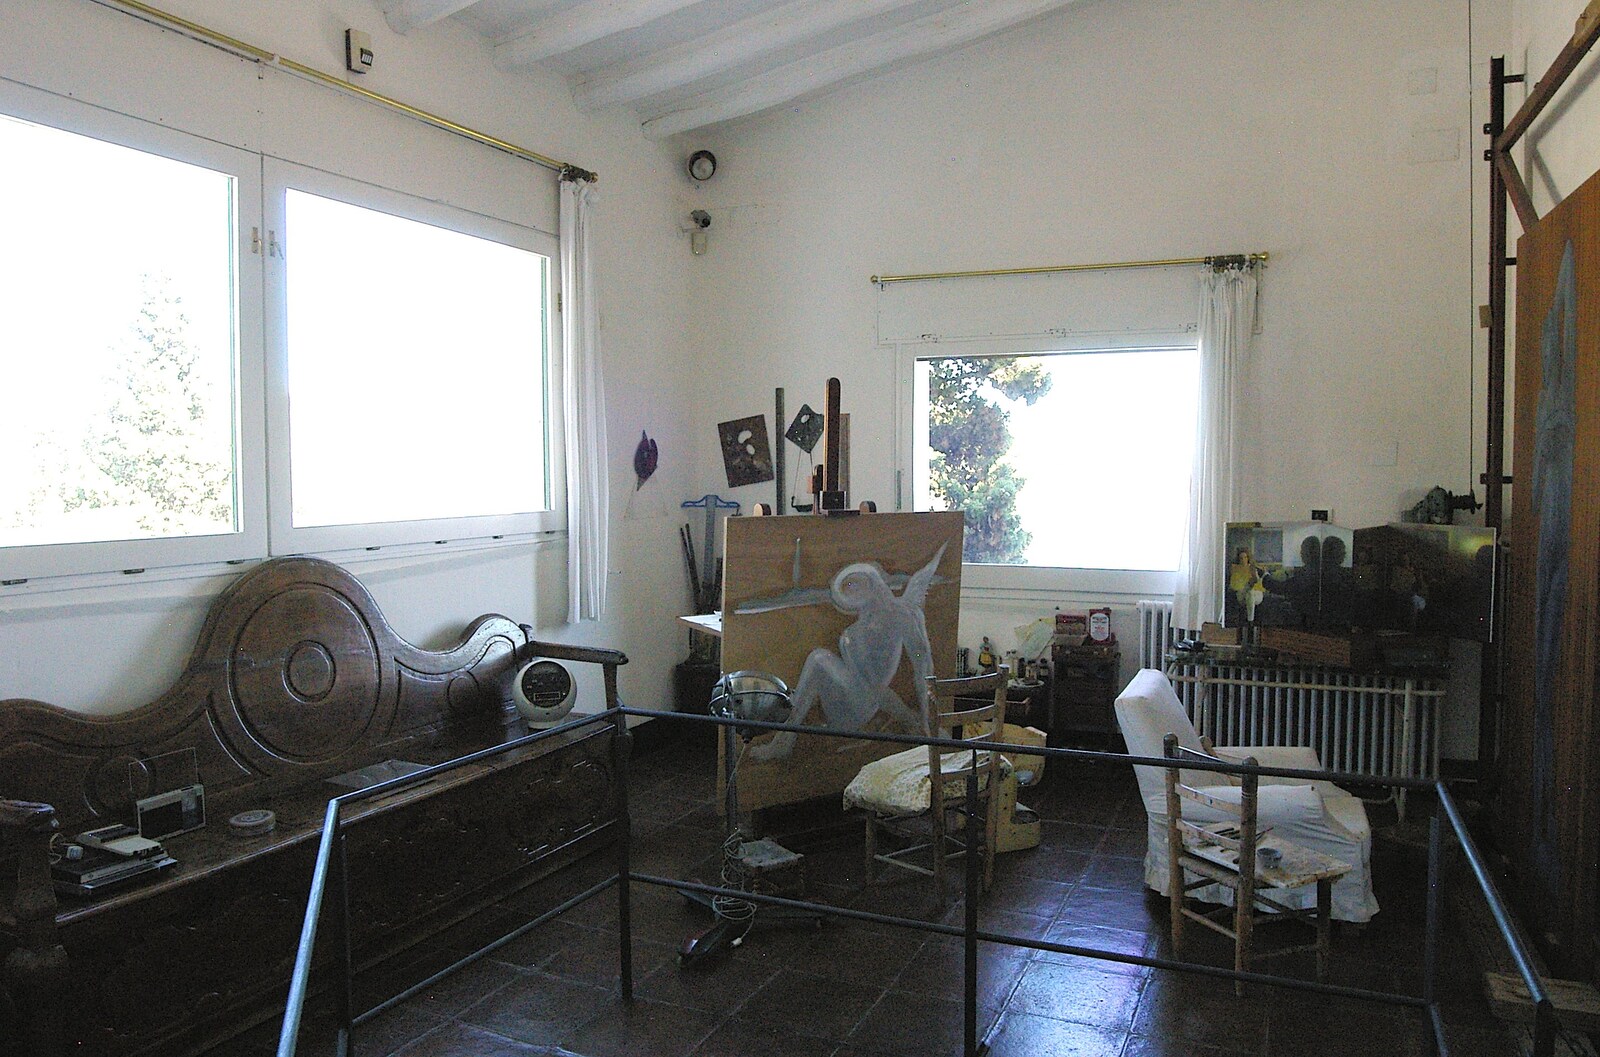 The Dalí studio from Salvador Dalí's House, Port Lligat, Spain - 19th Deptember 2006